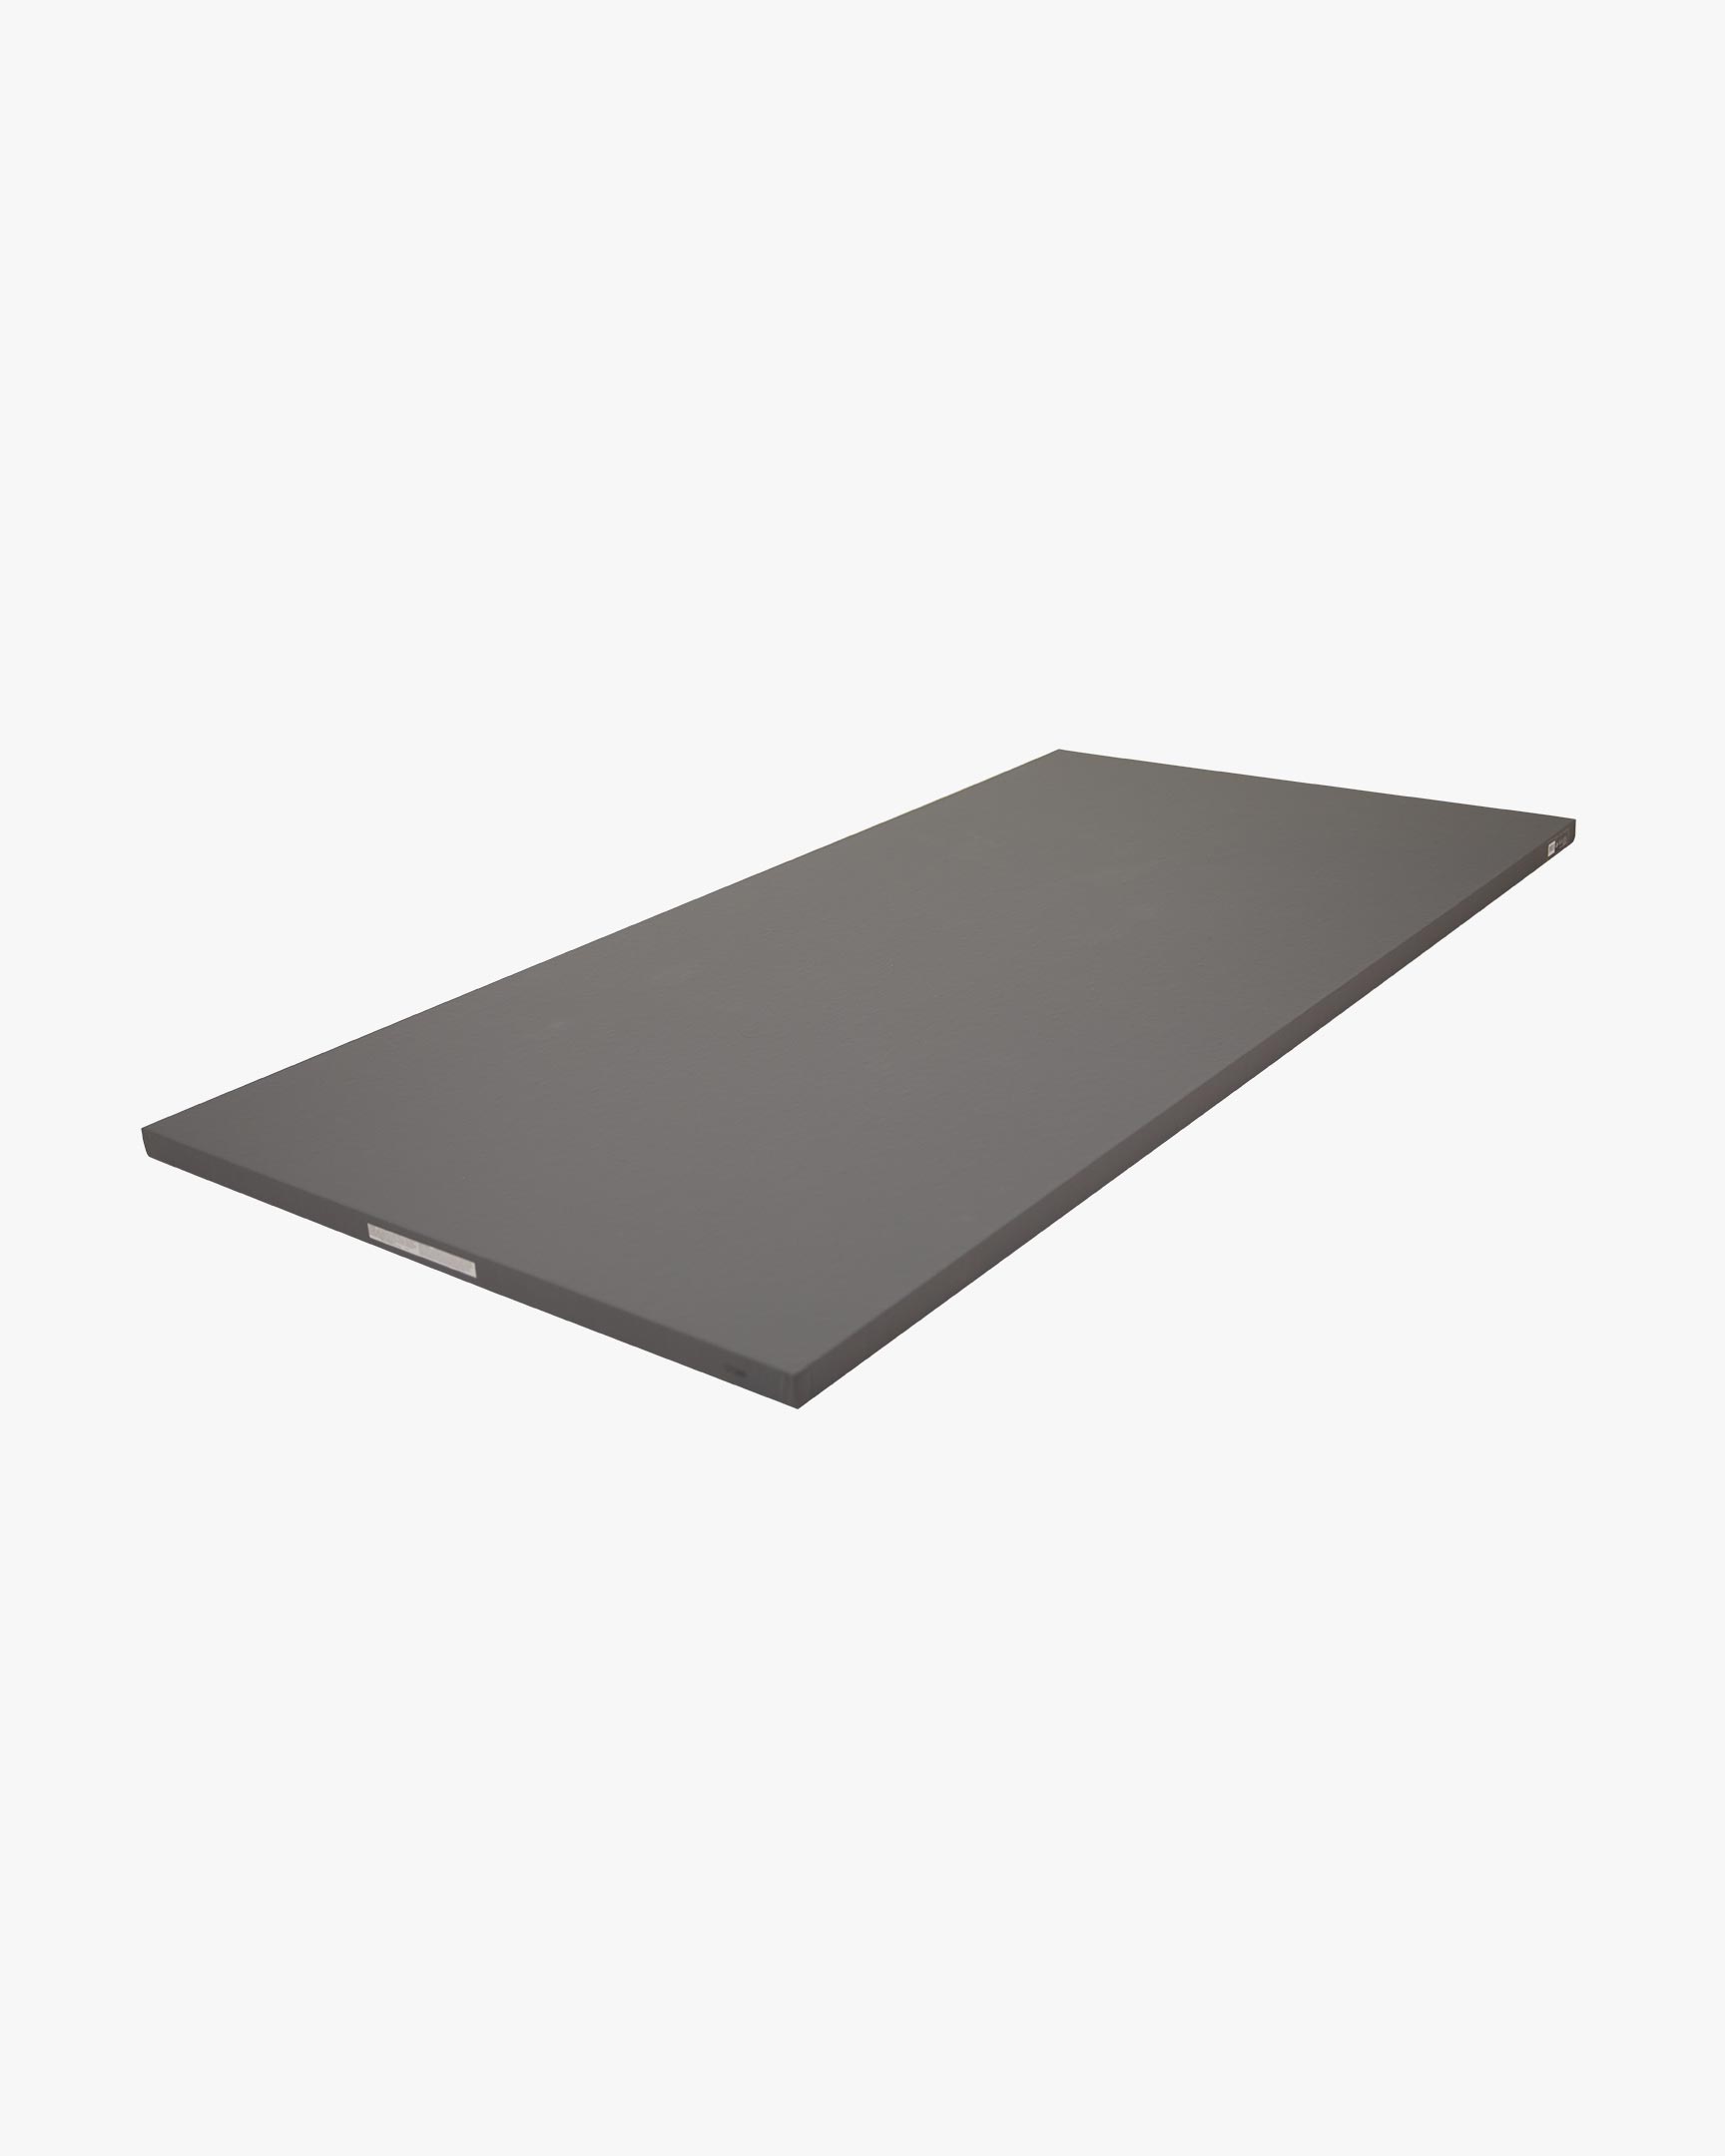 Smooth Tile Mat - 1m x 2m 1.5 Inch